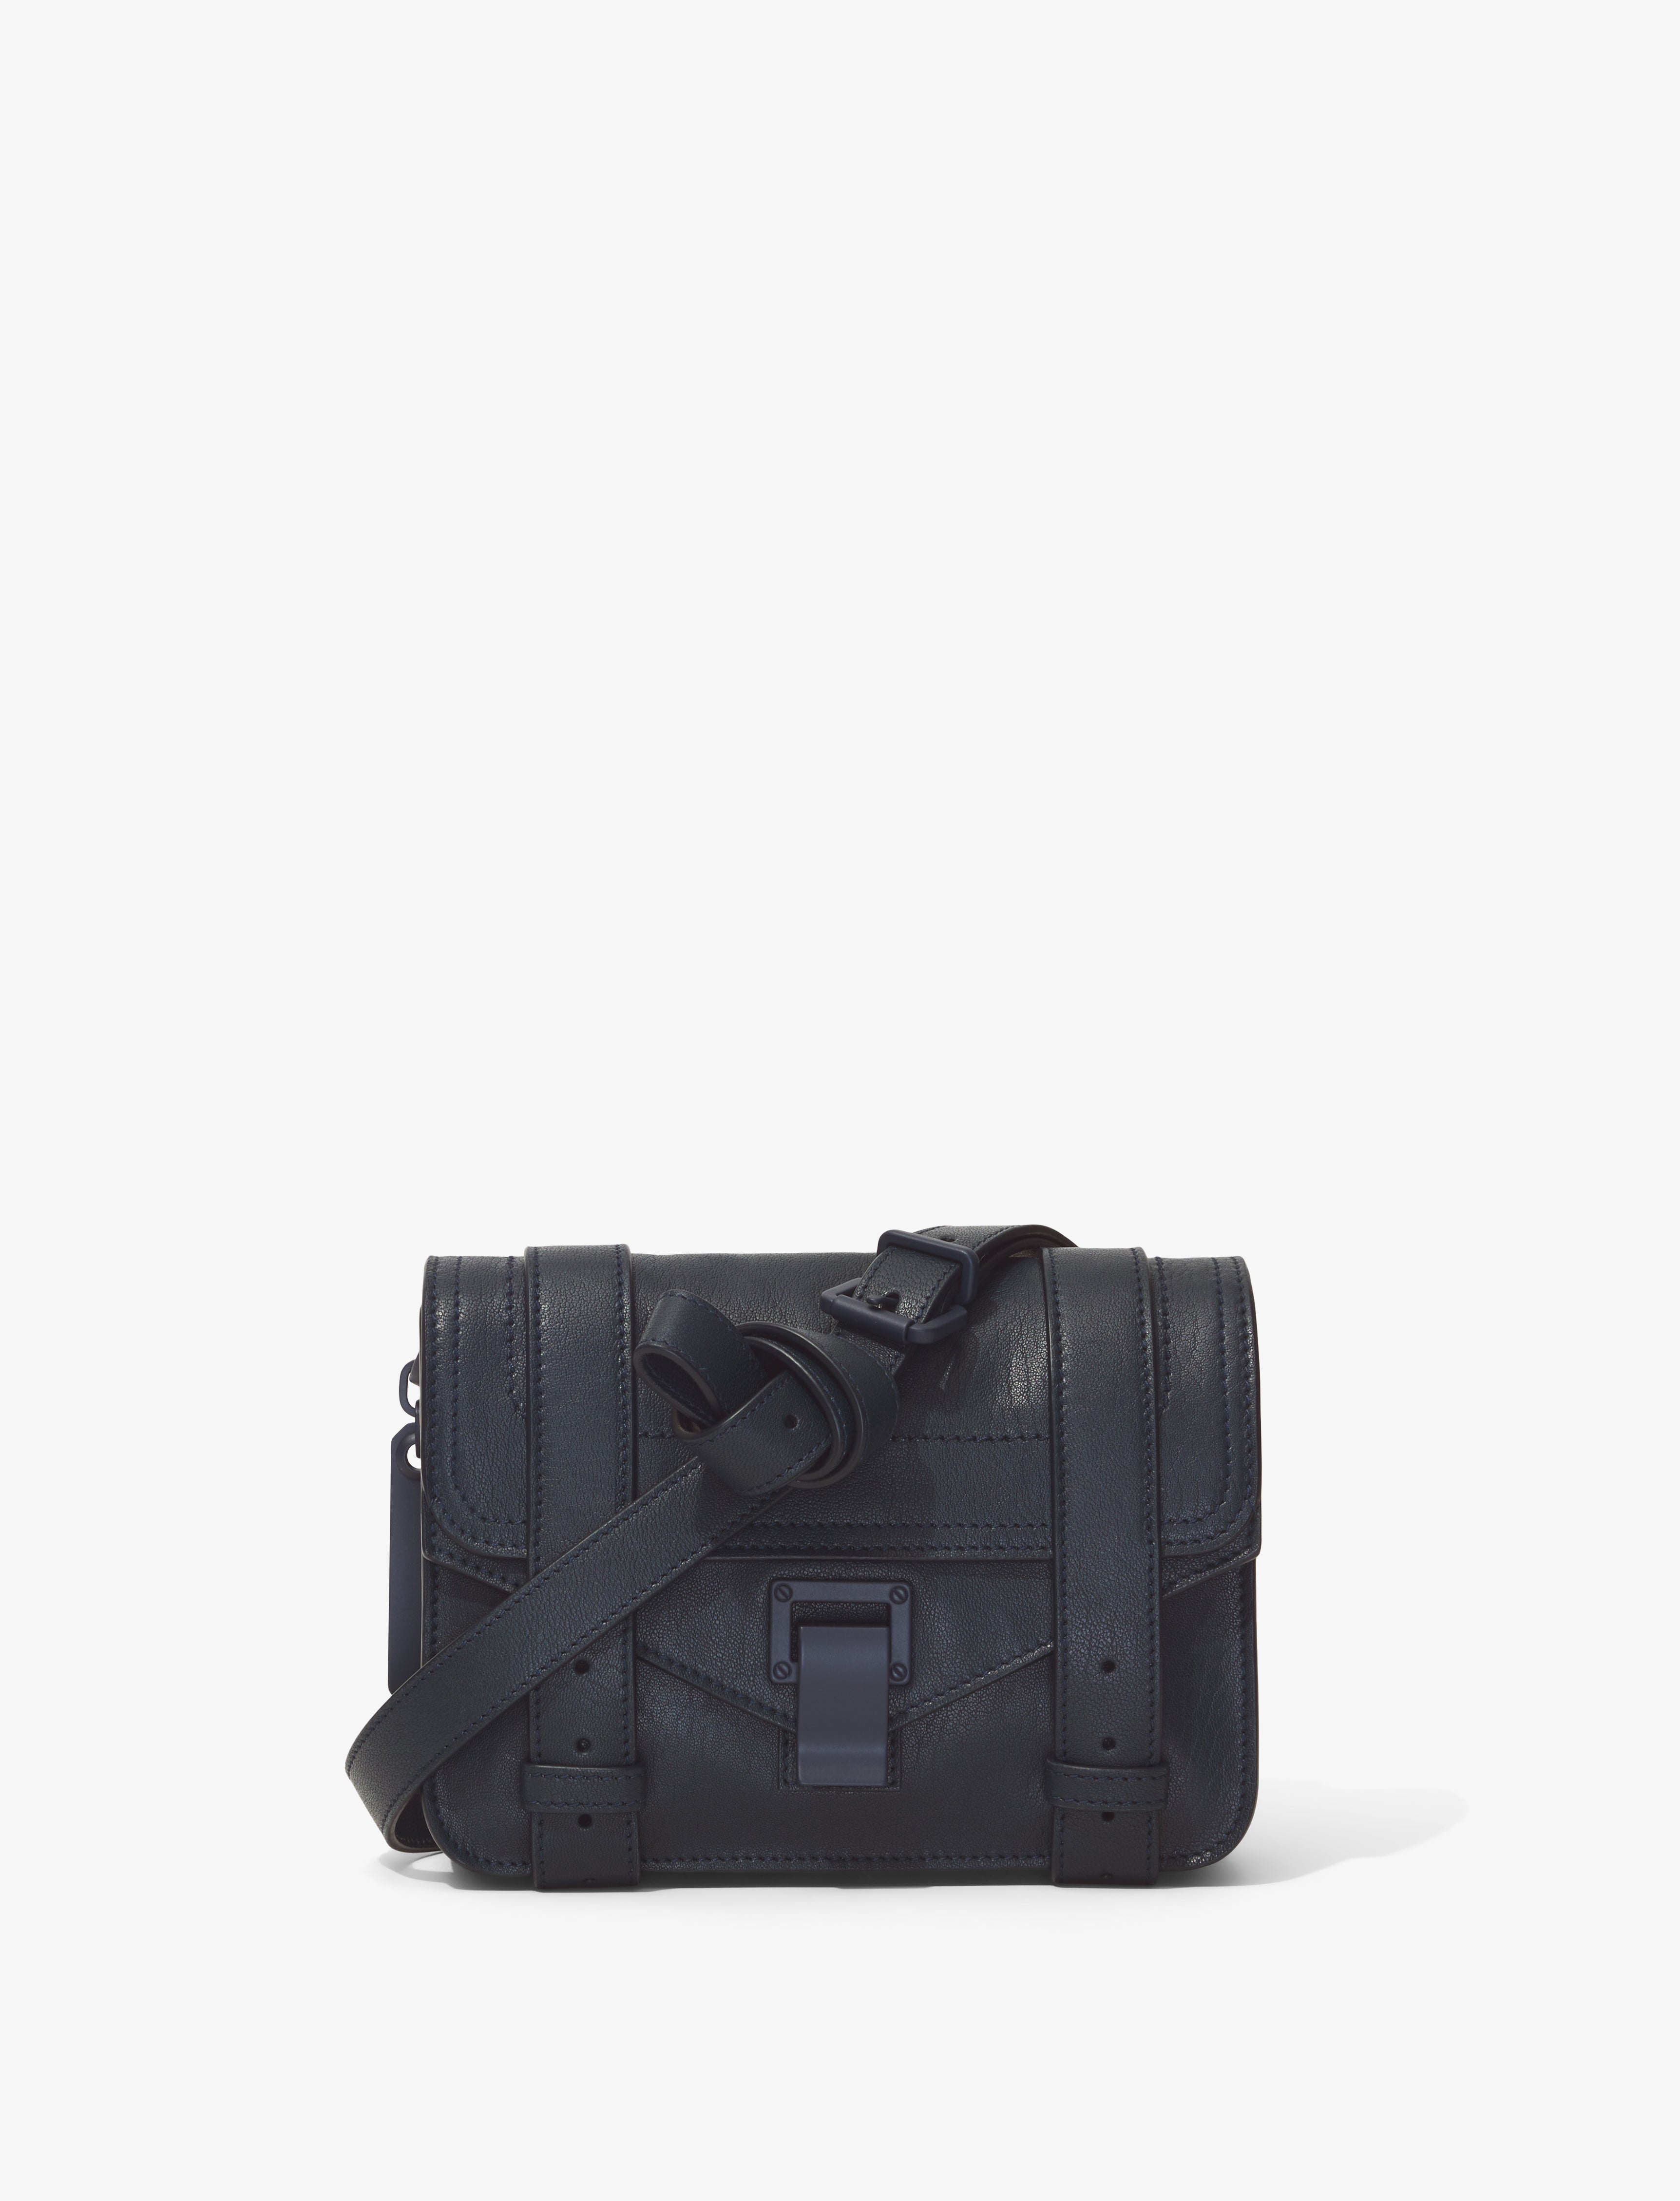 Proenza Schouler Tiny PS1 Tonal Leather Top Handle Bag in Sand